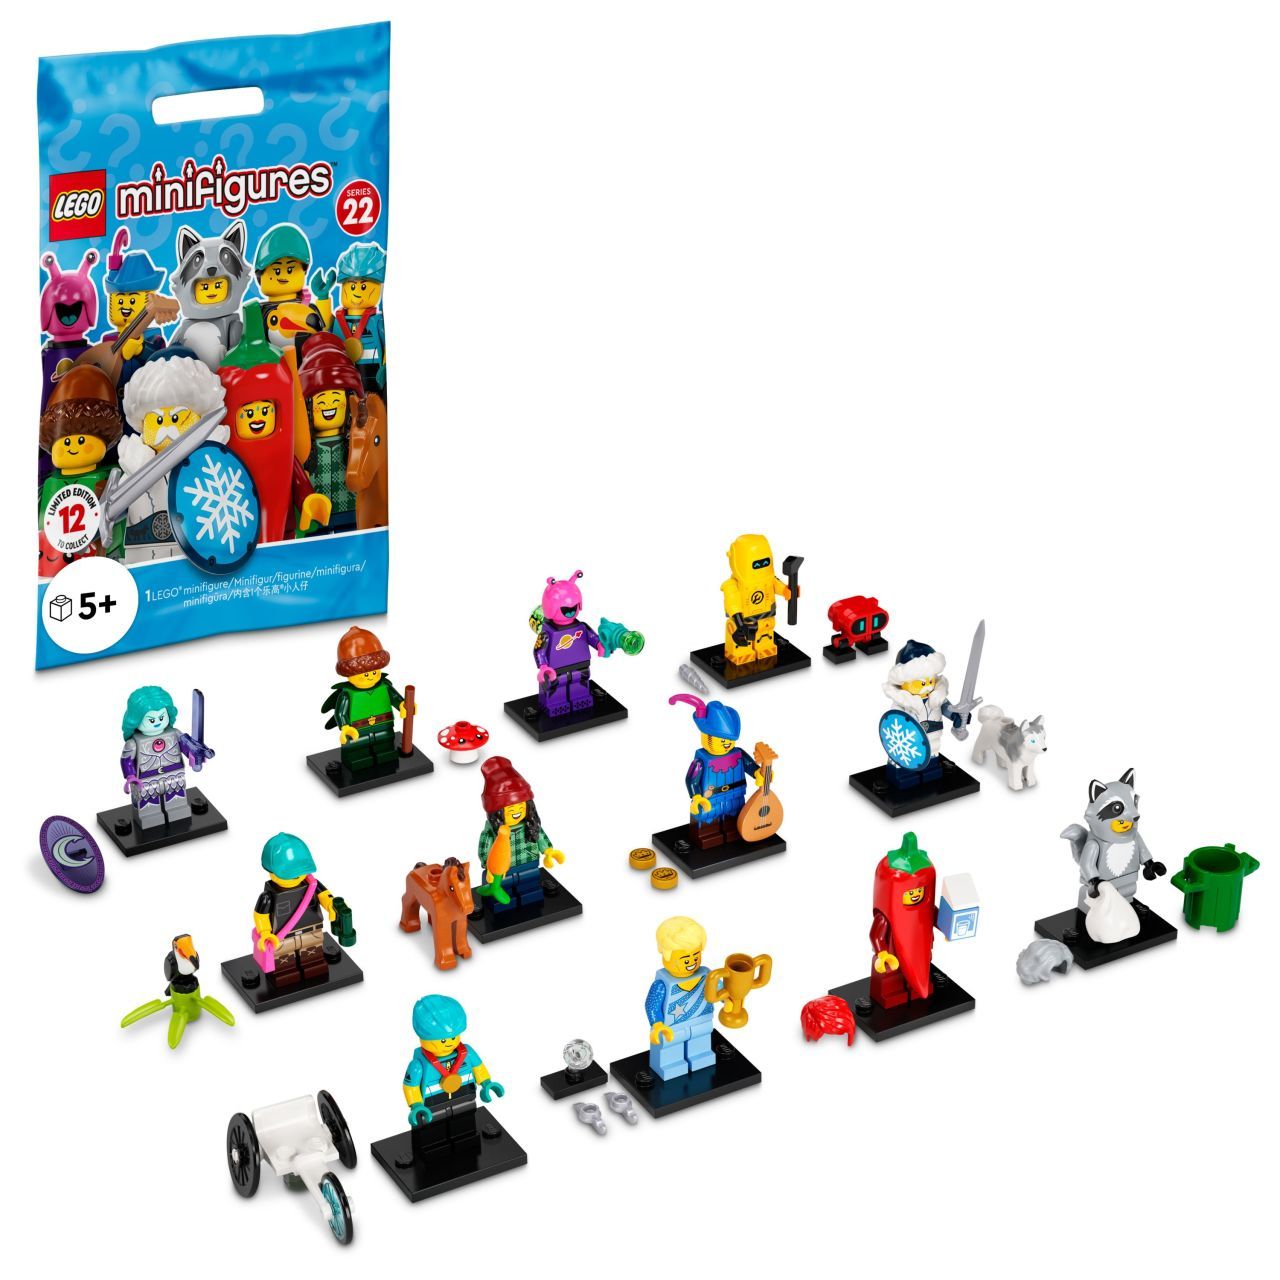 Lego Minifigures 22 seri